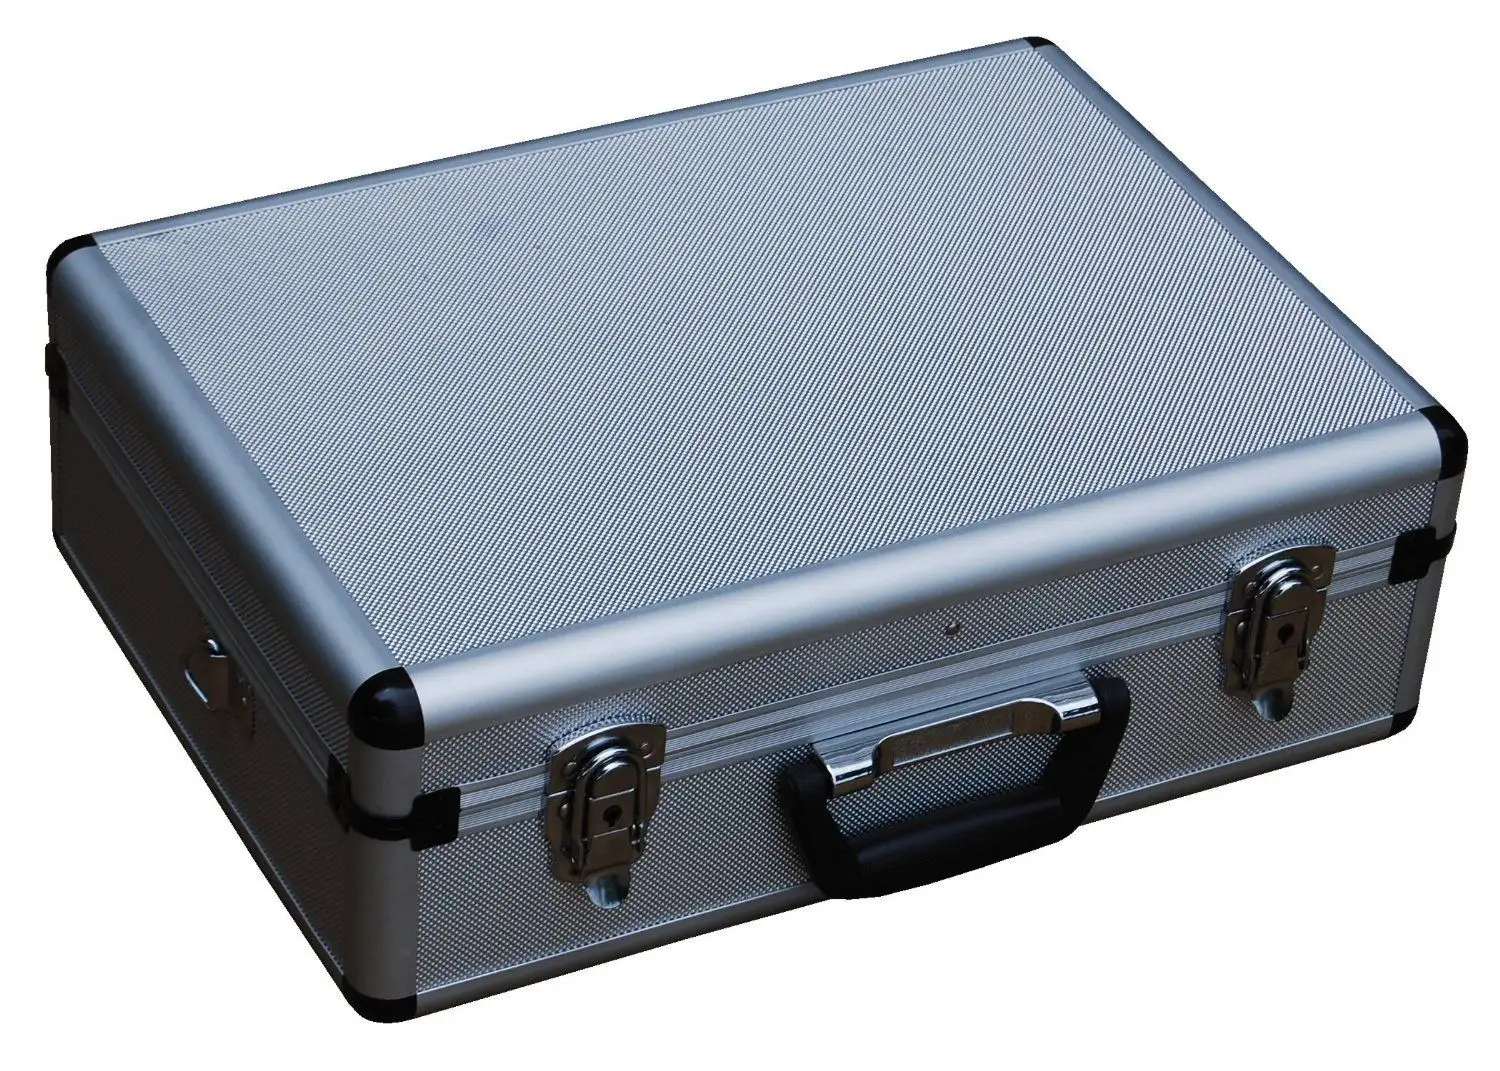 Alumínio metal duro mens pasta portátil caixa de ferramentas transportando caso profissional voo caso